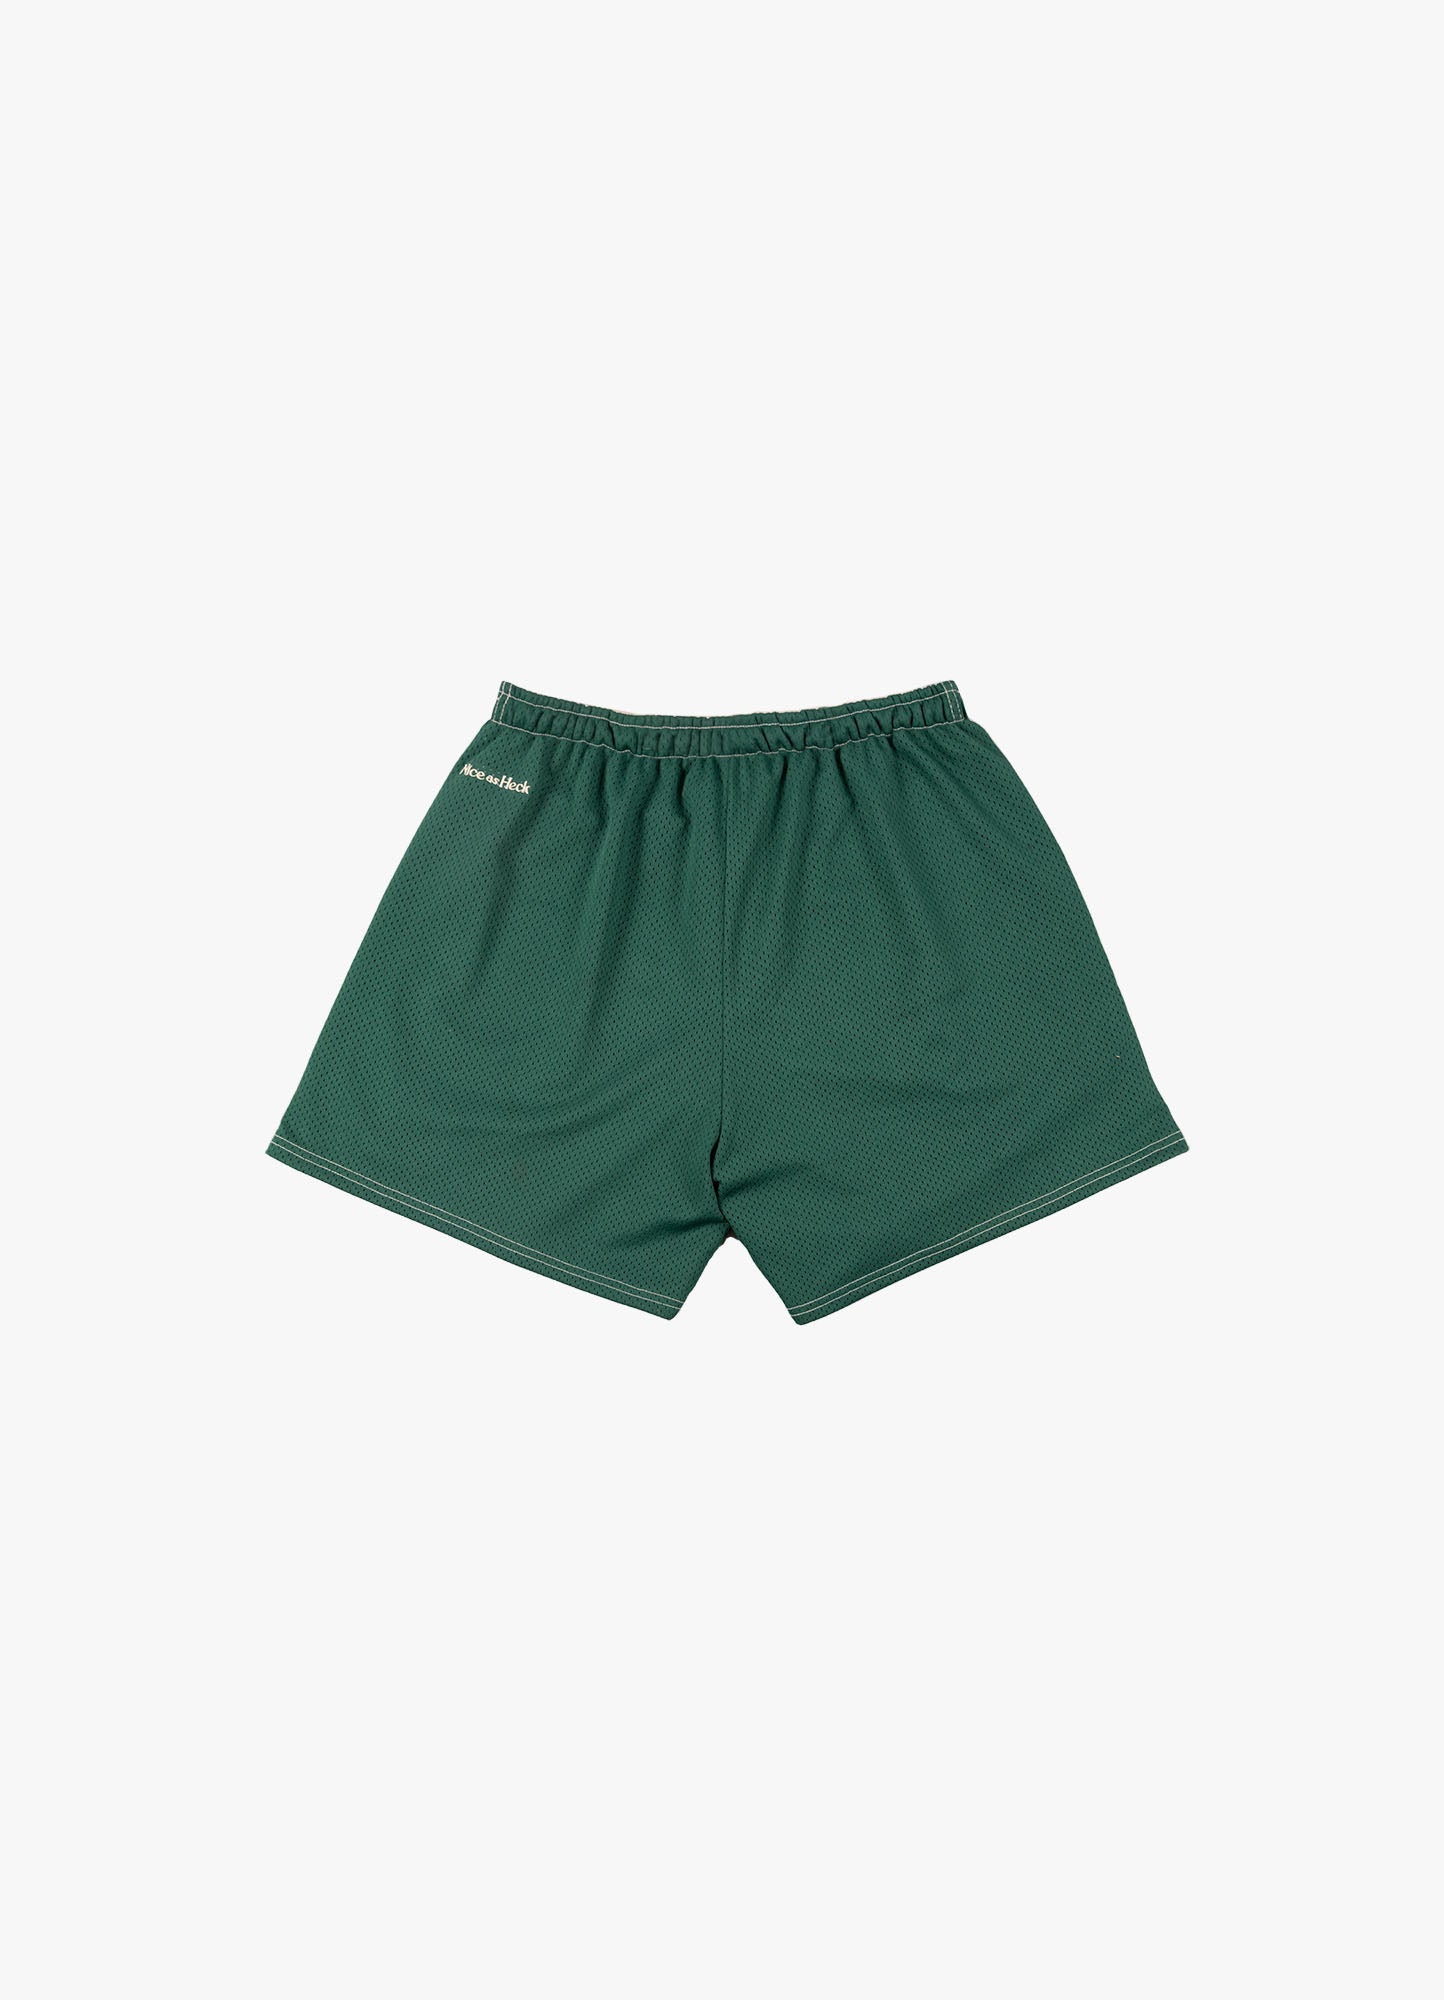 Outdoor Rec Gym Shorts (Women's) | Green – Nice as Heck